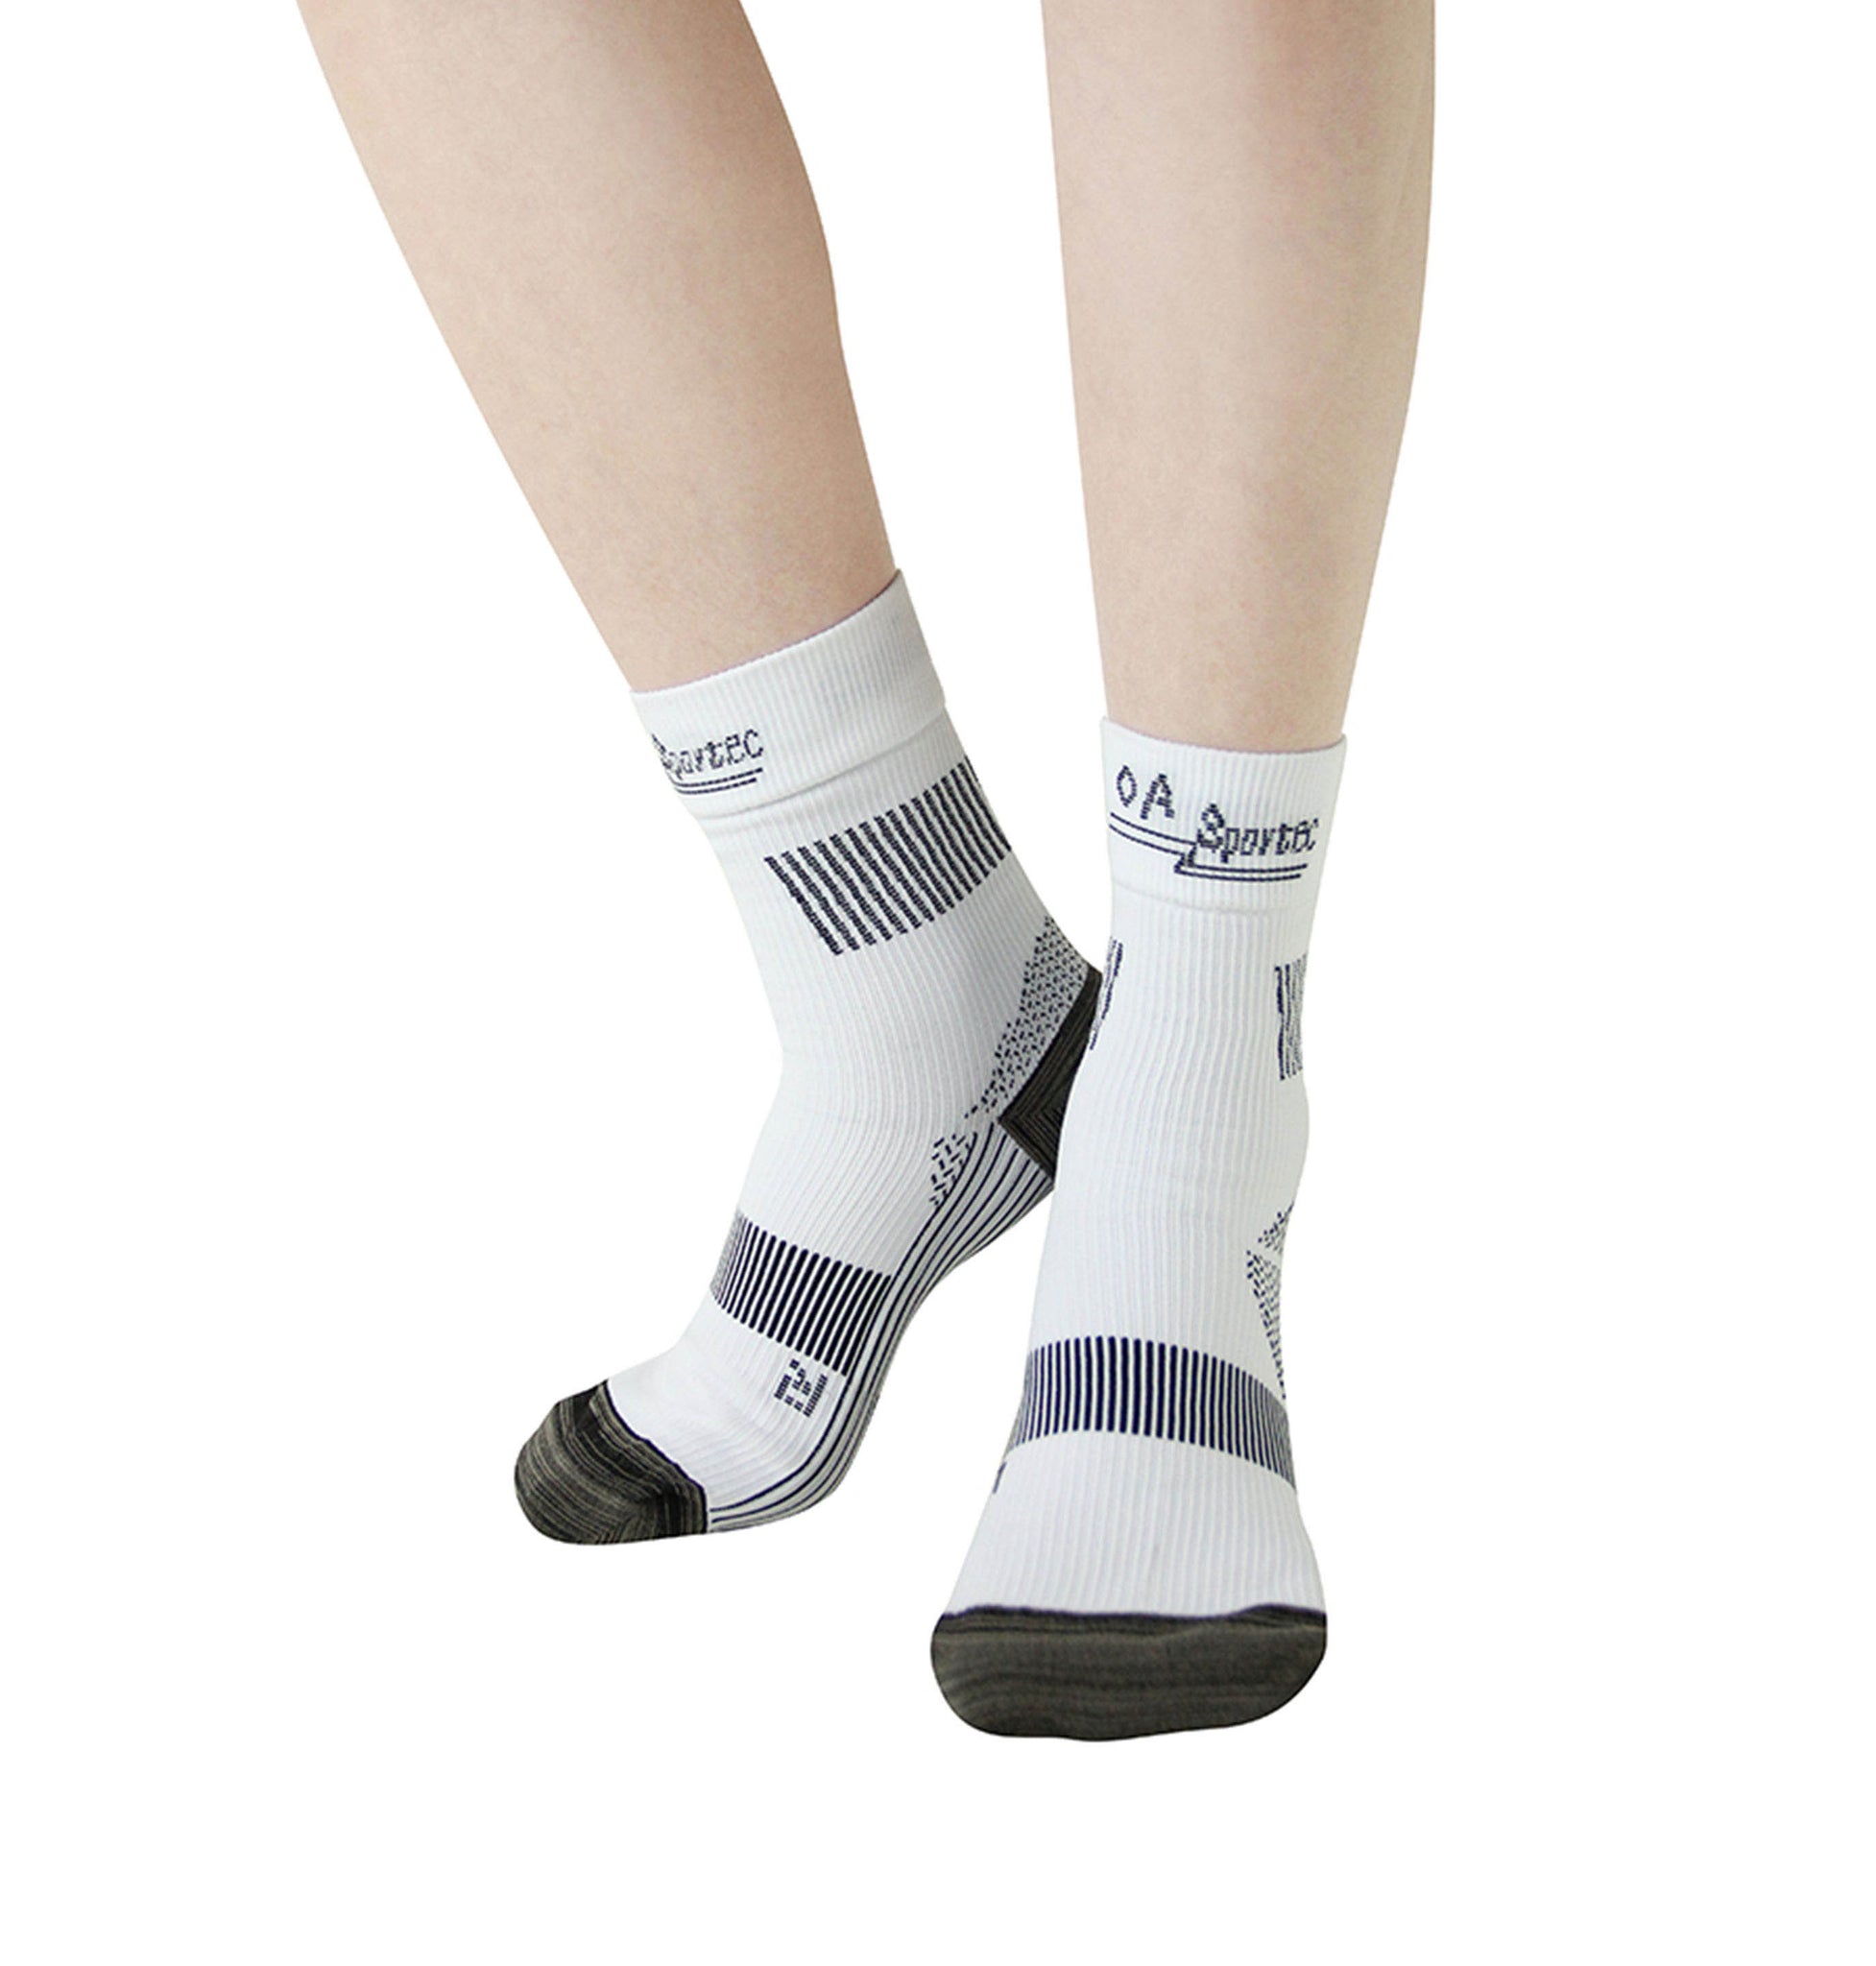 Sportec Plantar Fasciitis Compression Socks